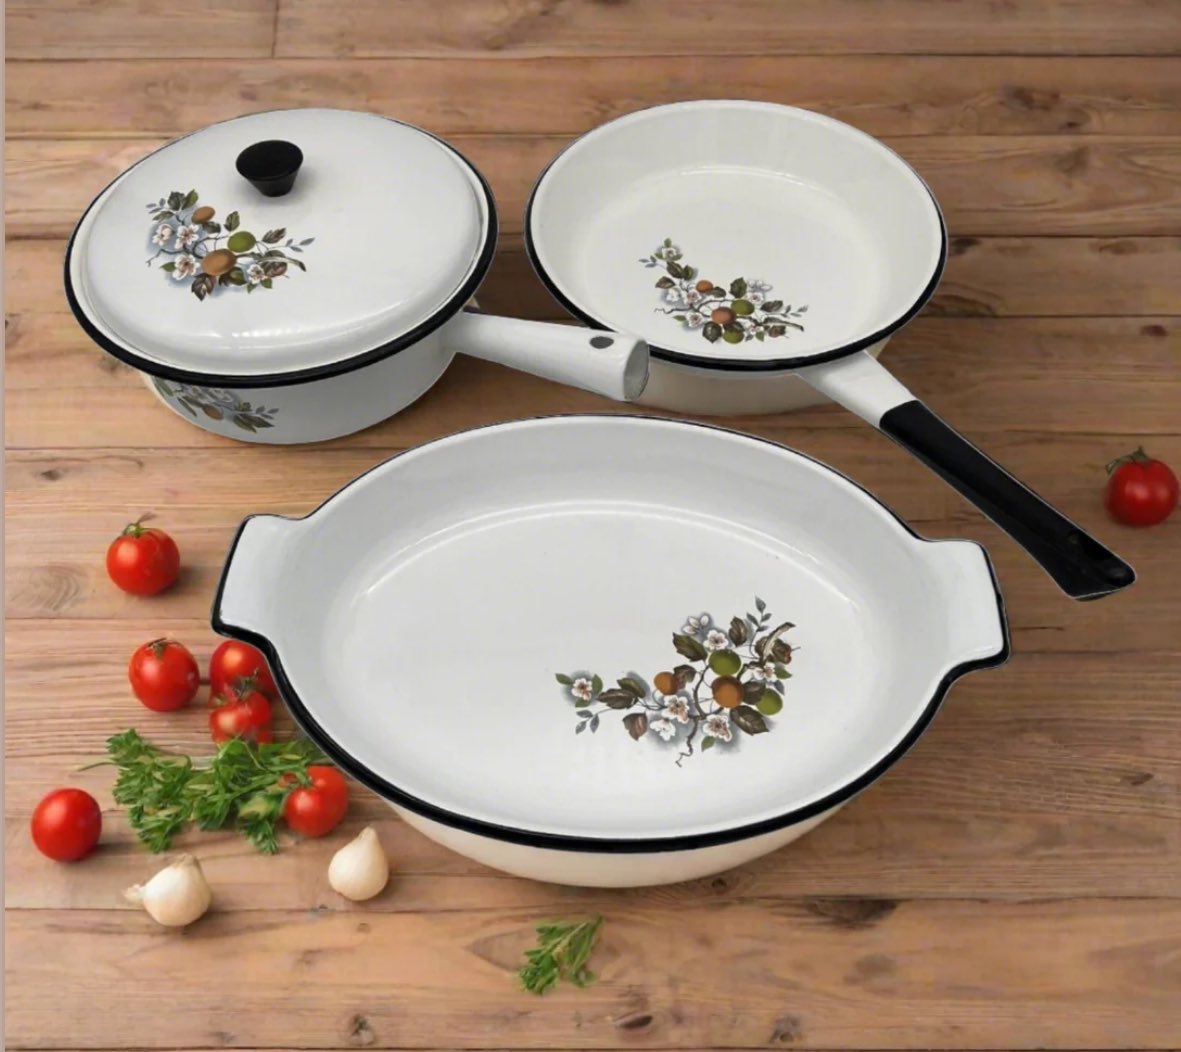 Beautiful French vintage enamel pan set £39.99 free postage #allthingsfrenchstore #vintagekitchen #bargainhunt #kitchenware allthingsfrenchstore.com/products/frenc…